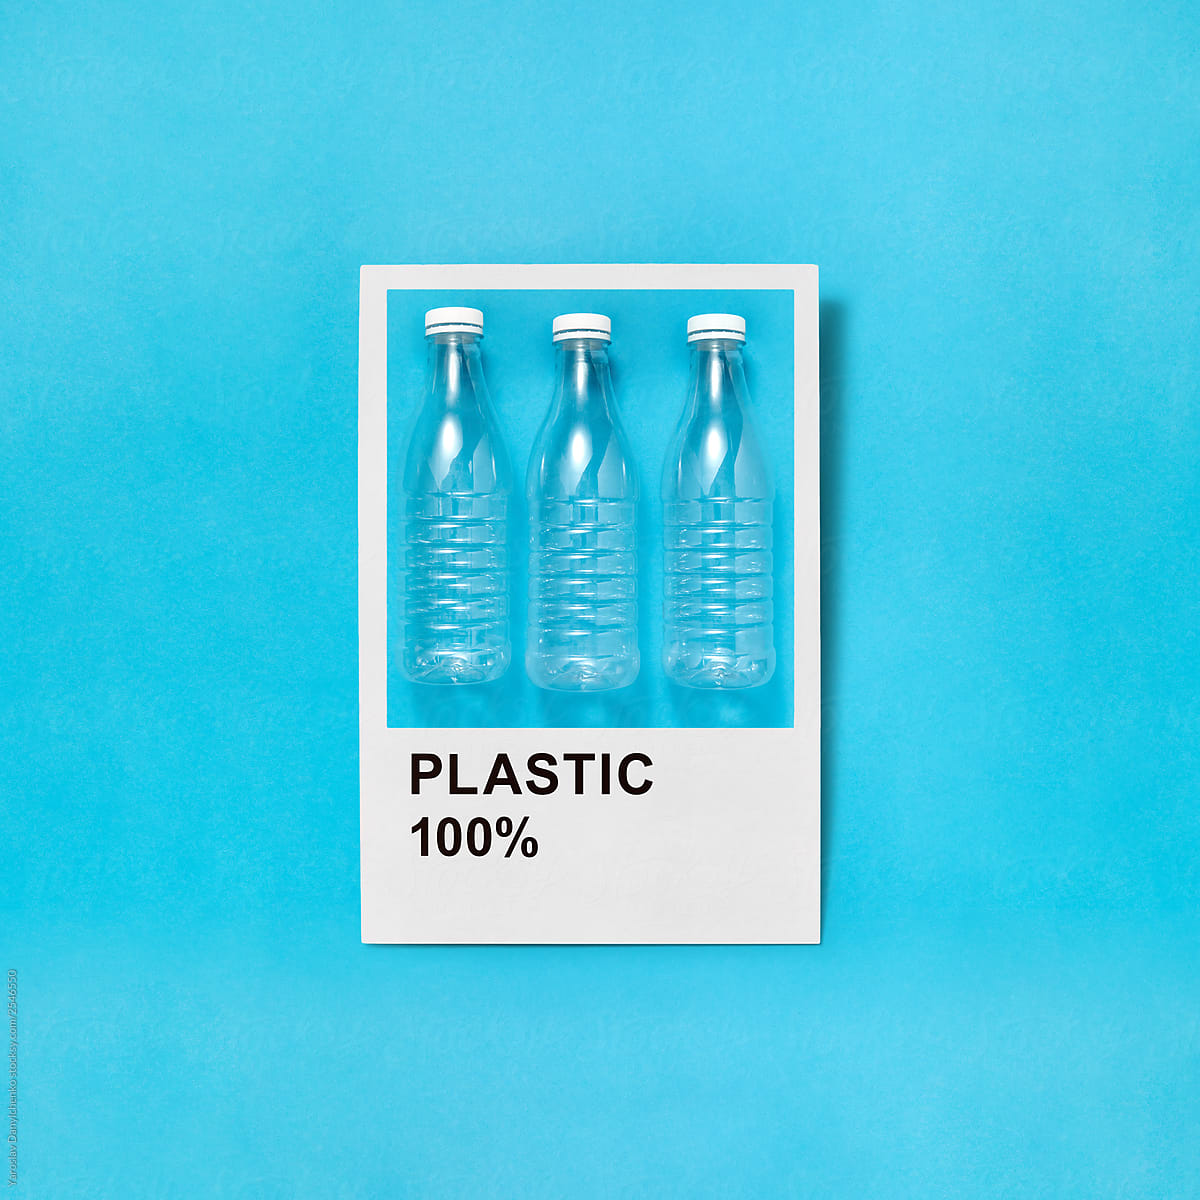 Plastic bottles in a frame on a blue background